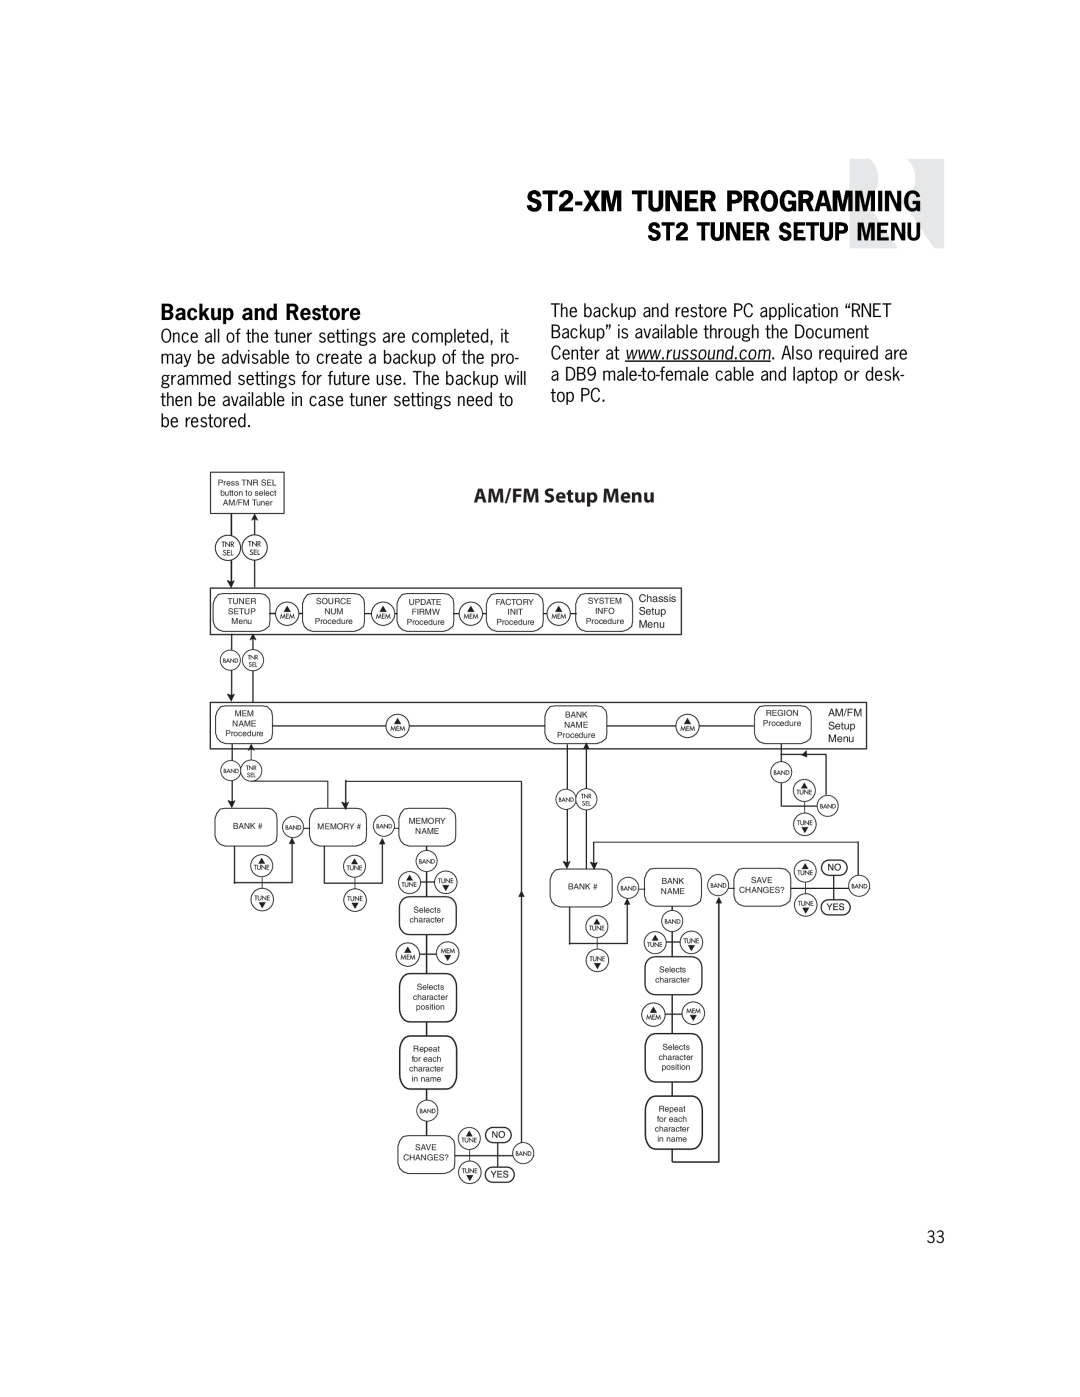 Russound manual Backup and Restore, AM/FM Setup Menu, ST2-XMTUNER PROGRAMMING, ST2 TUNER SETUP MENU, Am/Fm 